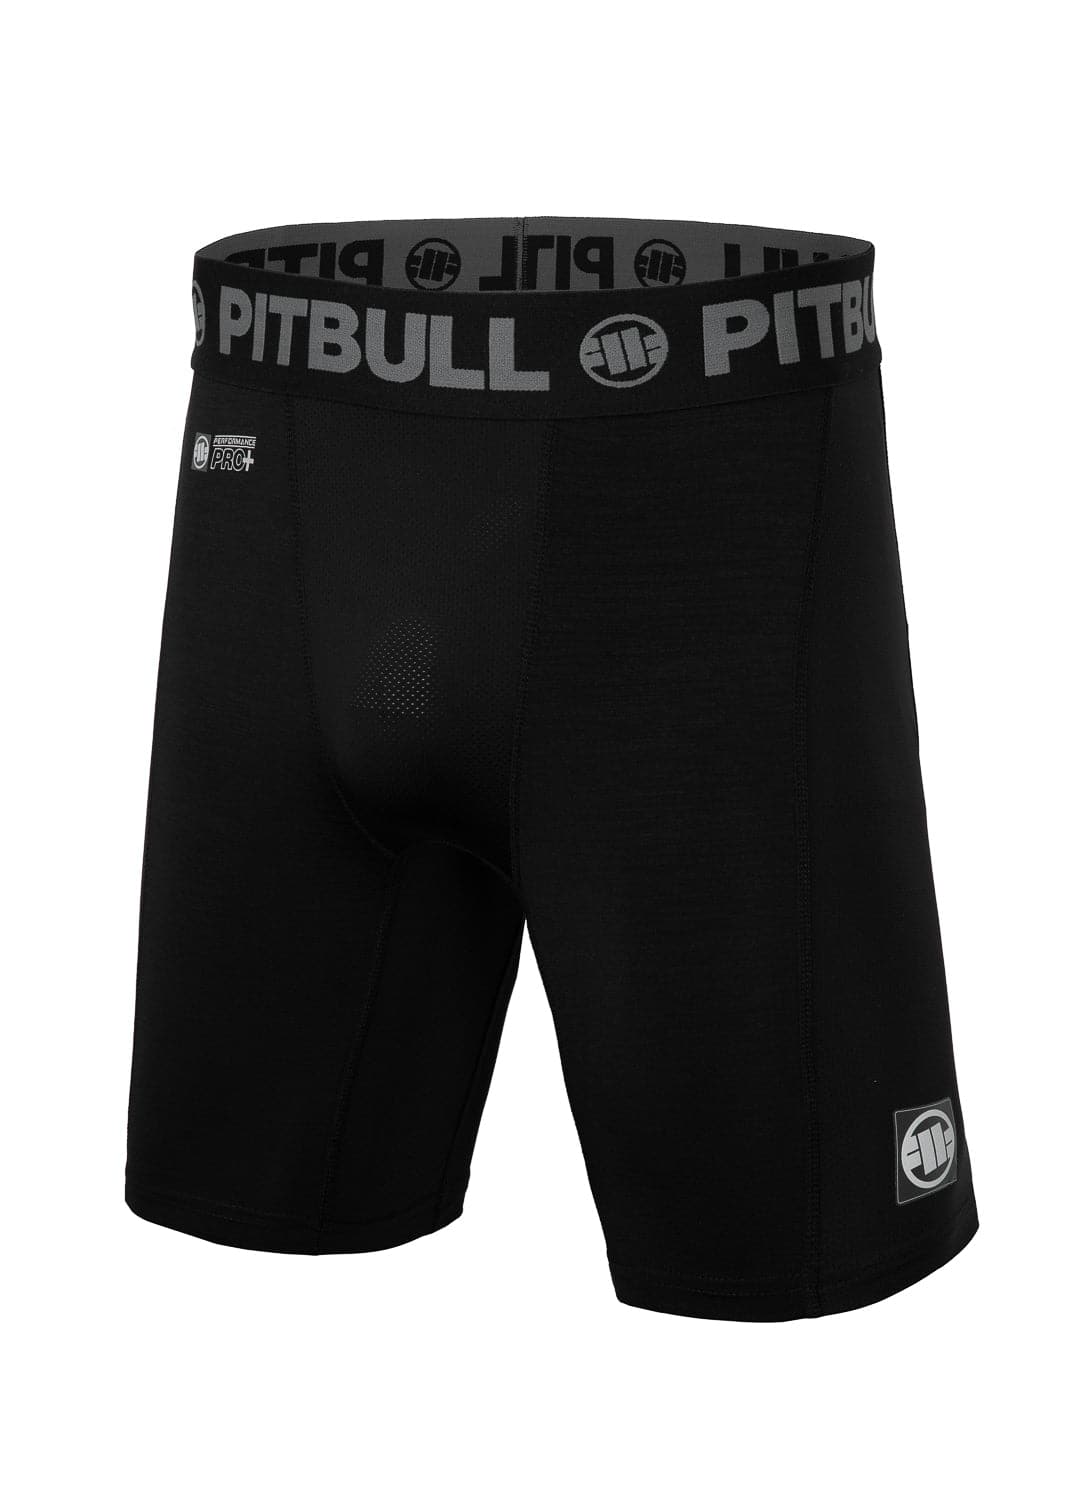 Hardcore Training Pitbull City Fight - Pantalones cortos de boxeo para  hombre, artes marciales mixtas, combate, BJJ, fitness, Muay Thai,  Kickboxing